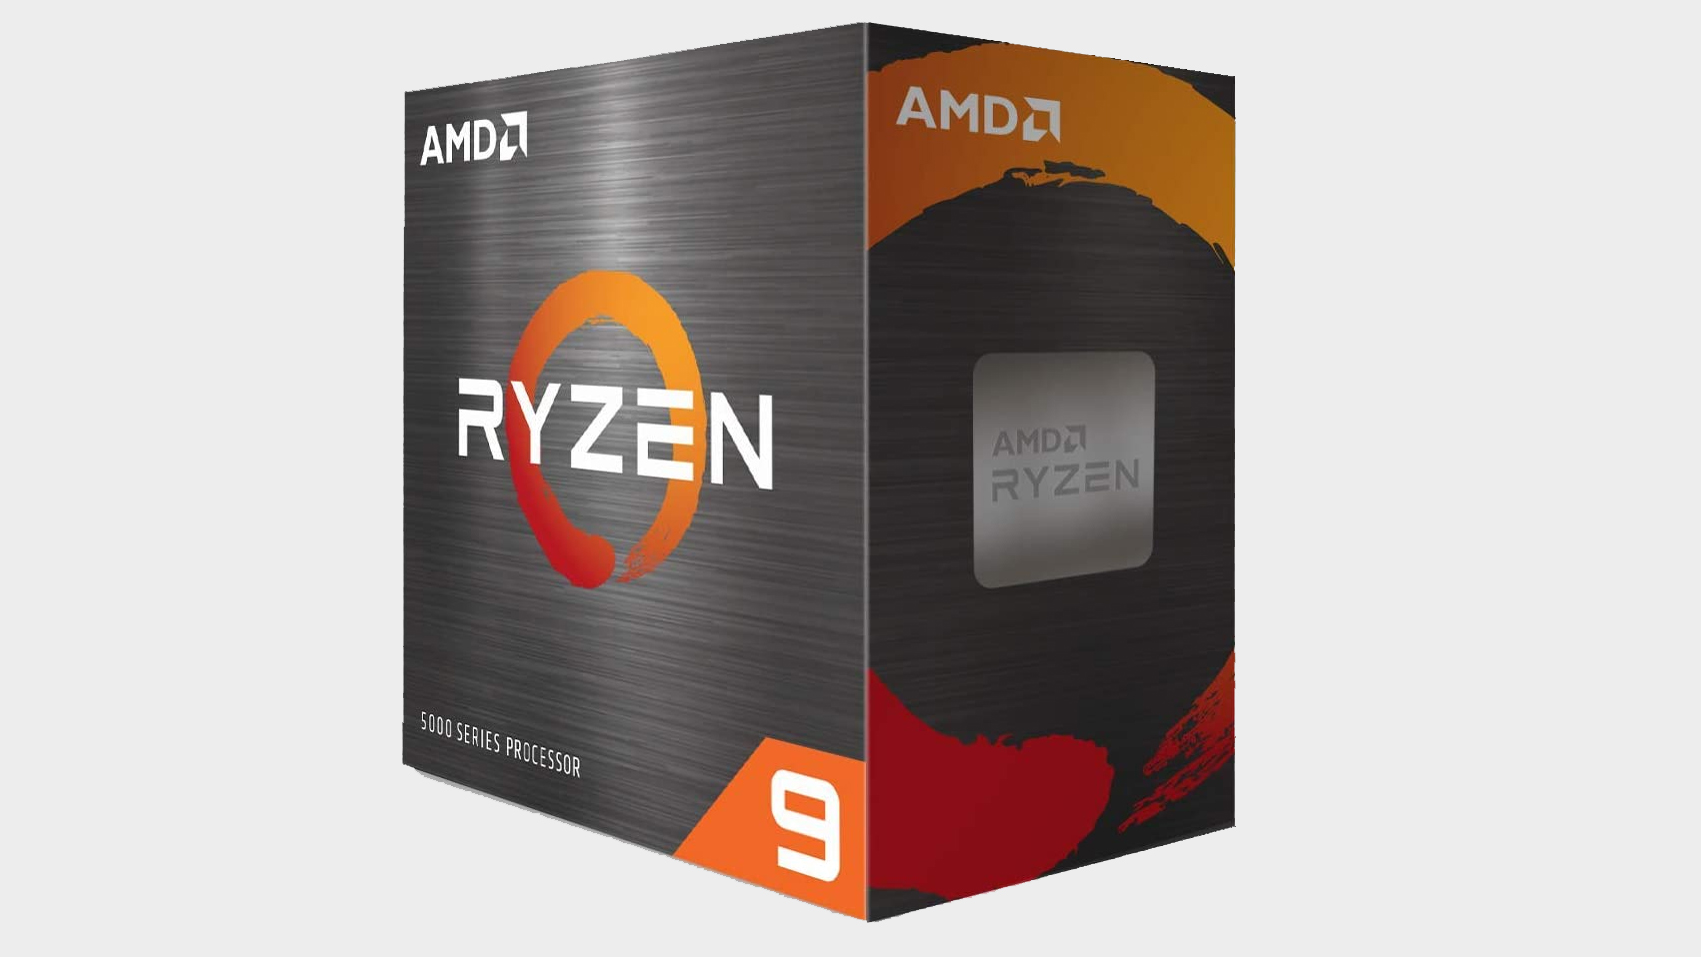 Best CPU for gaming: Ryzen 9 5900x